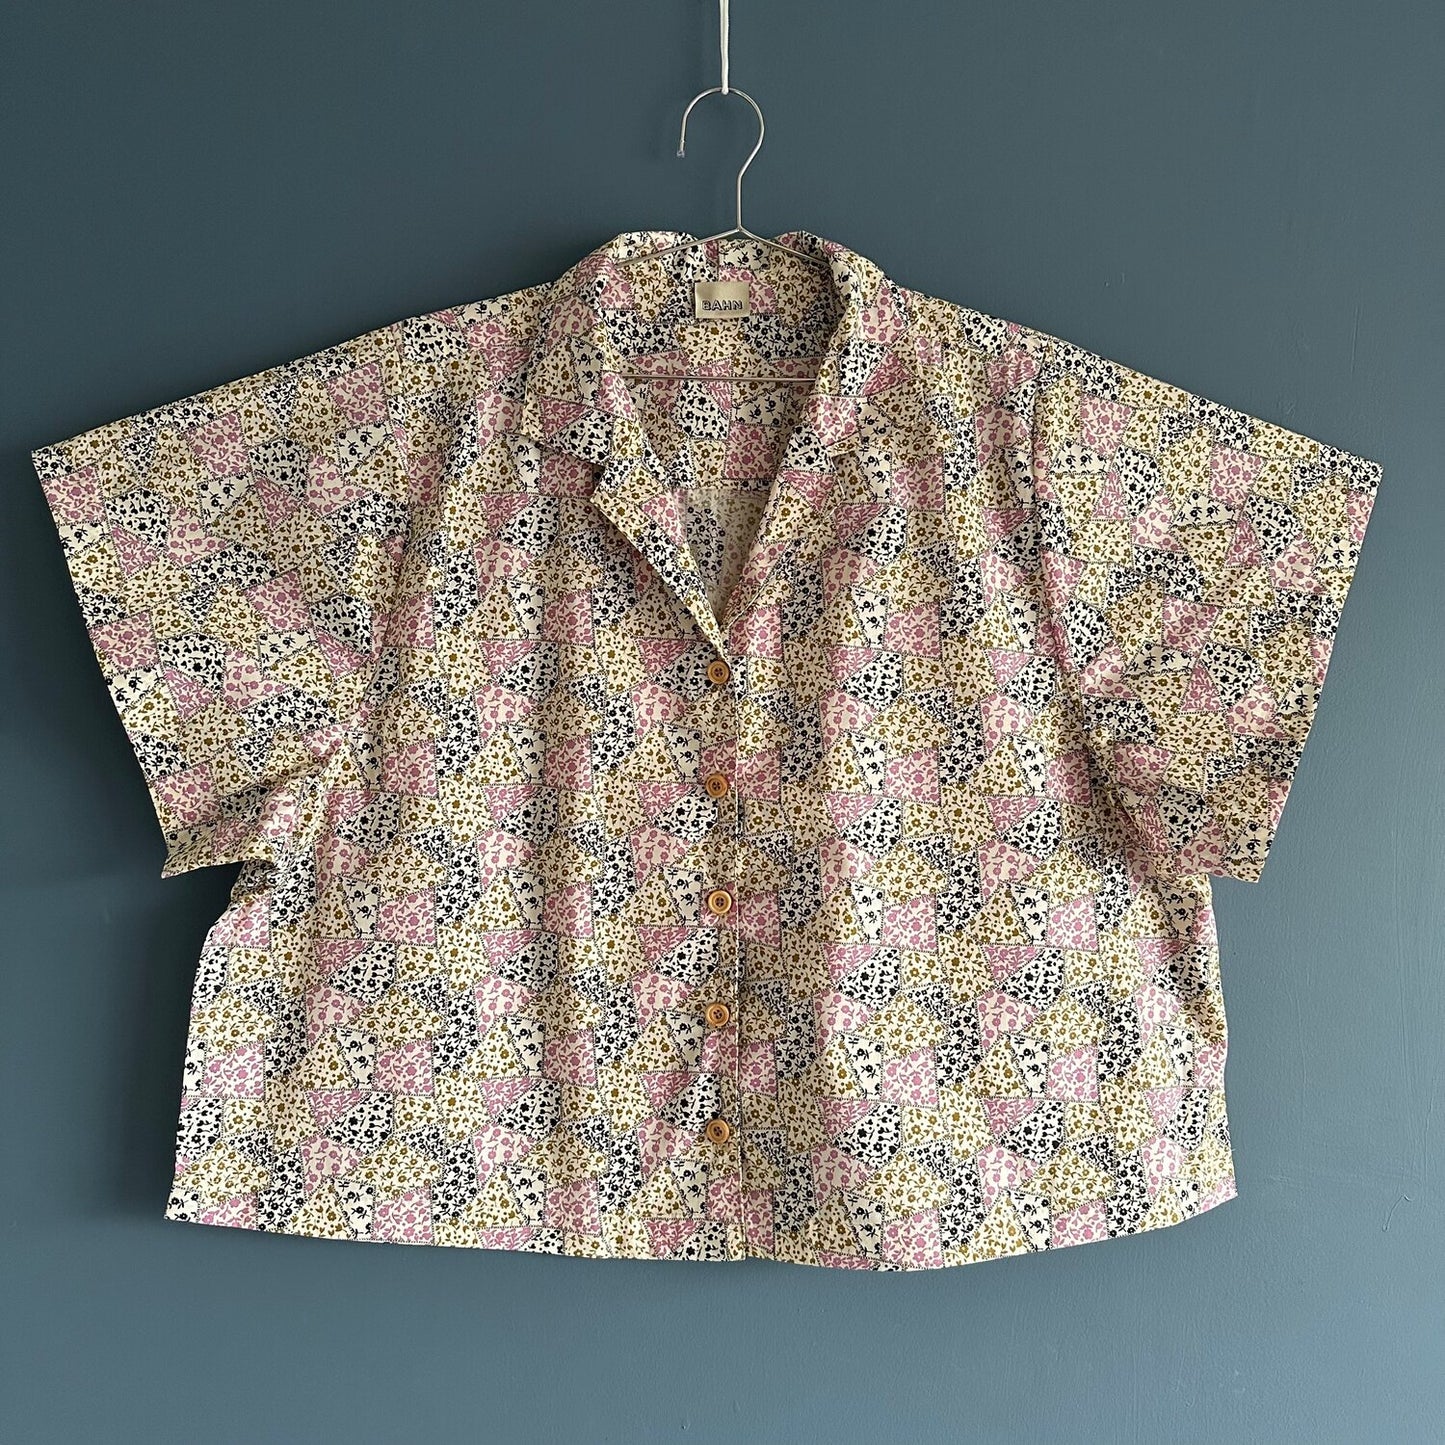 Eugene Printed Crazy Quilt Vintage Camp Shirt w/ oversized sleeves - Sz OS